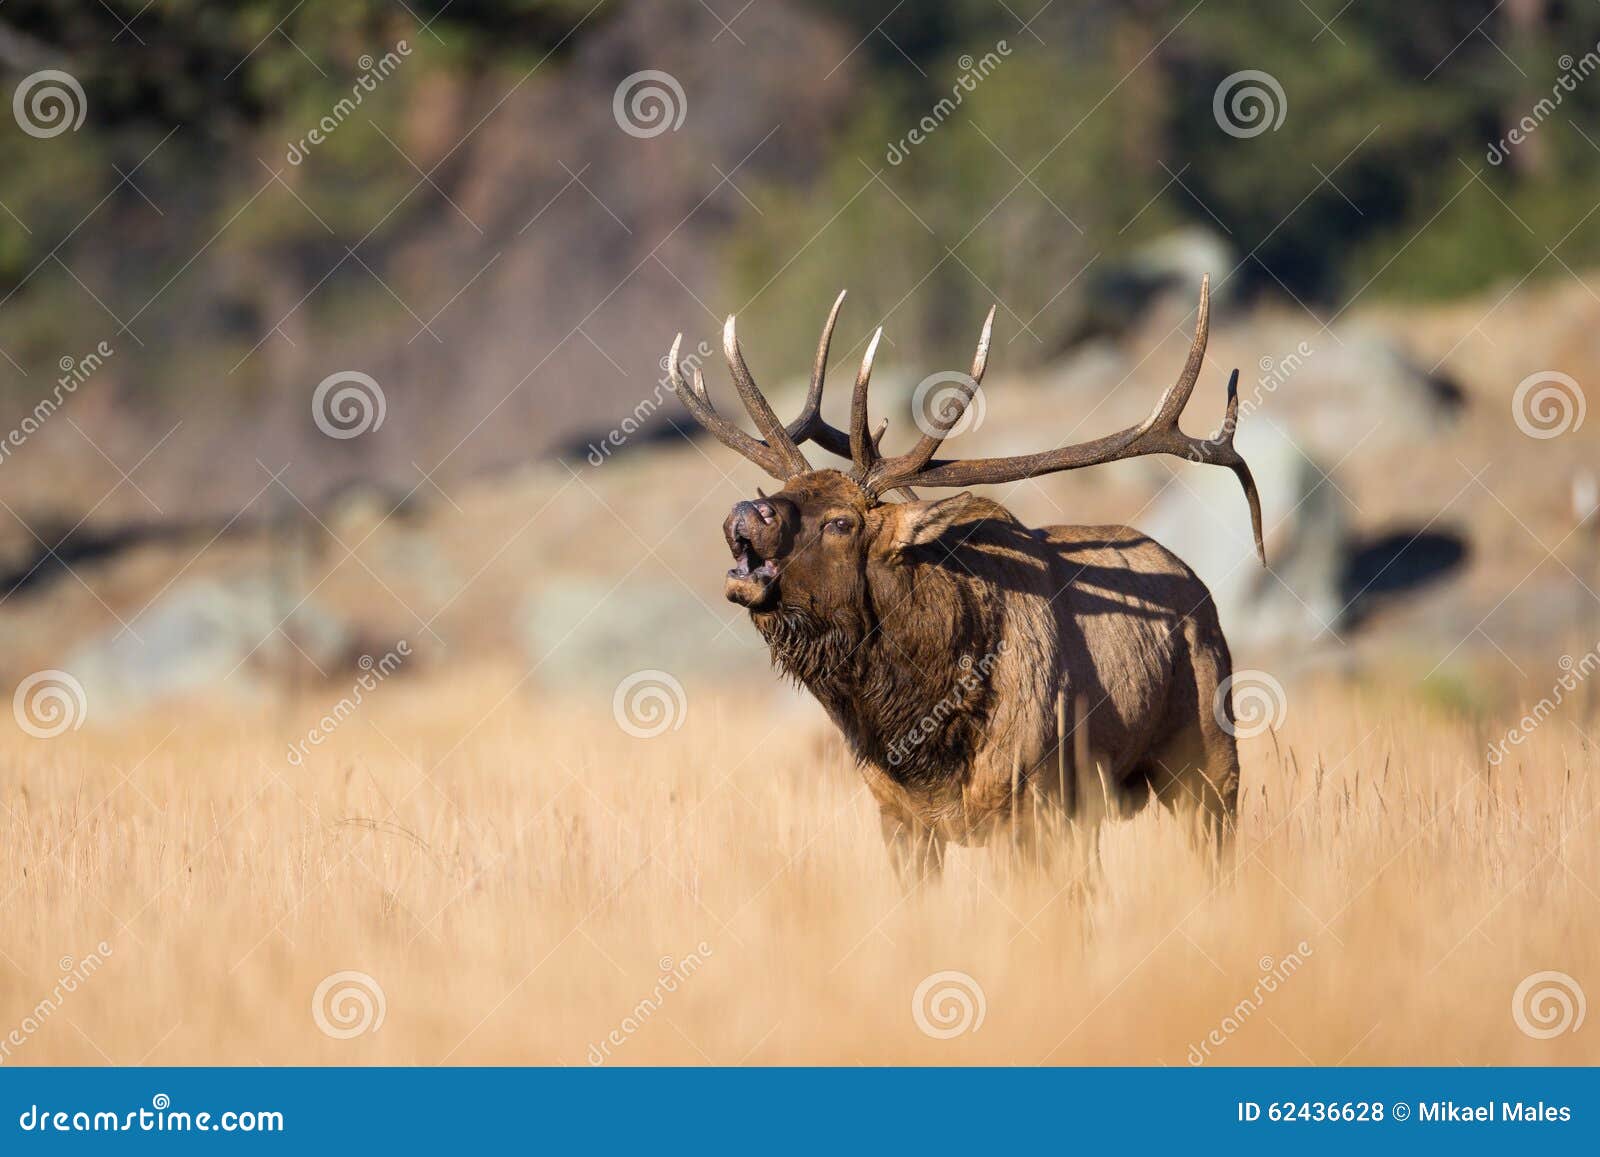 amazing landscape photograph go bull elk in rut